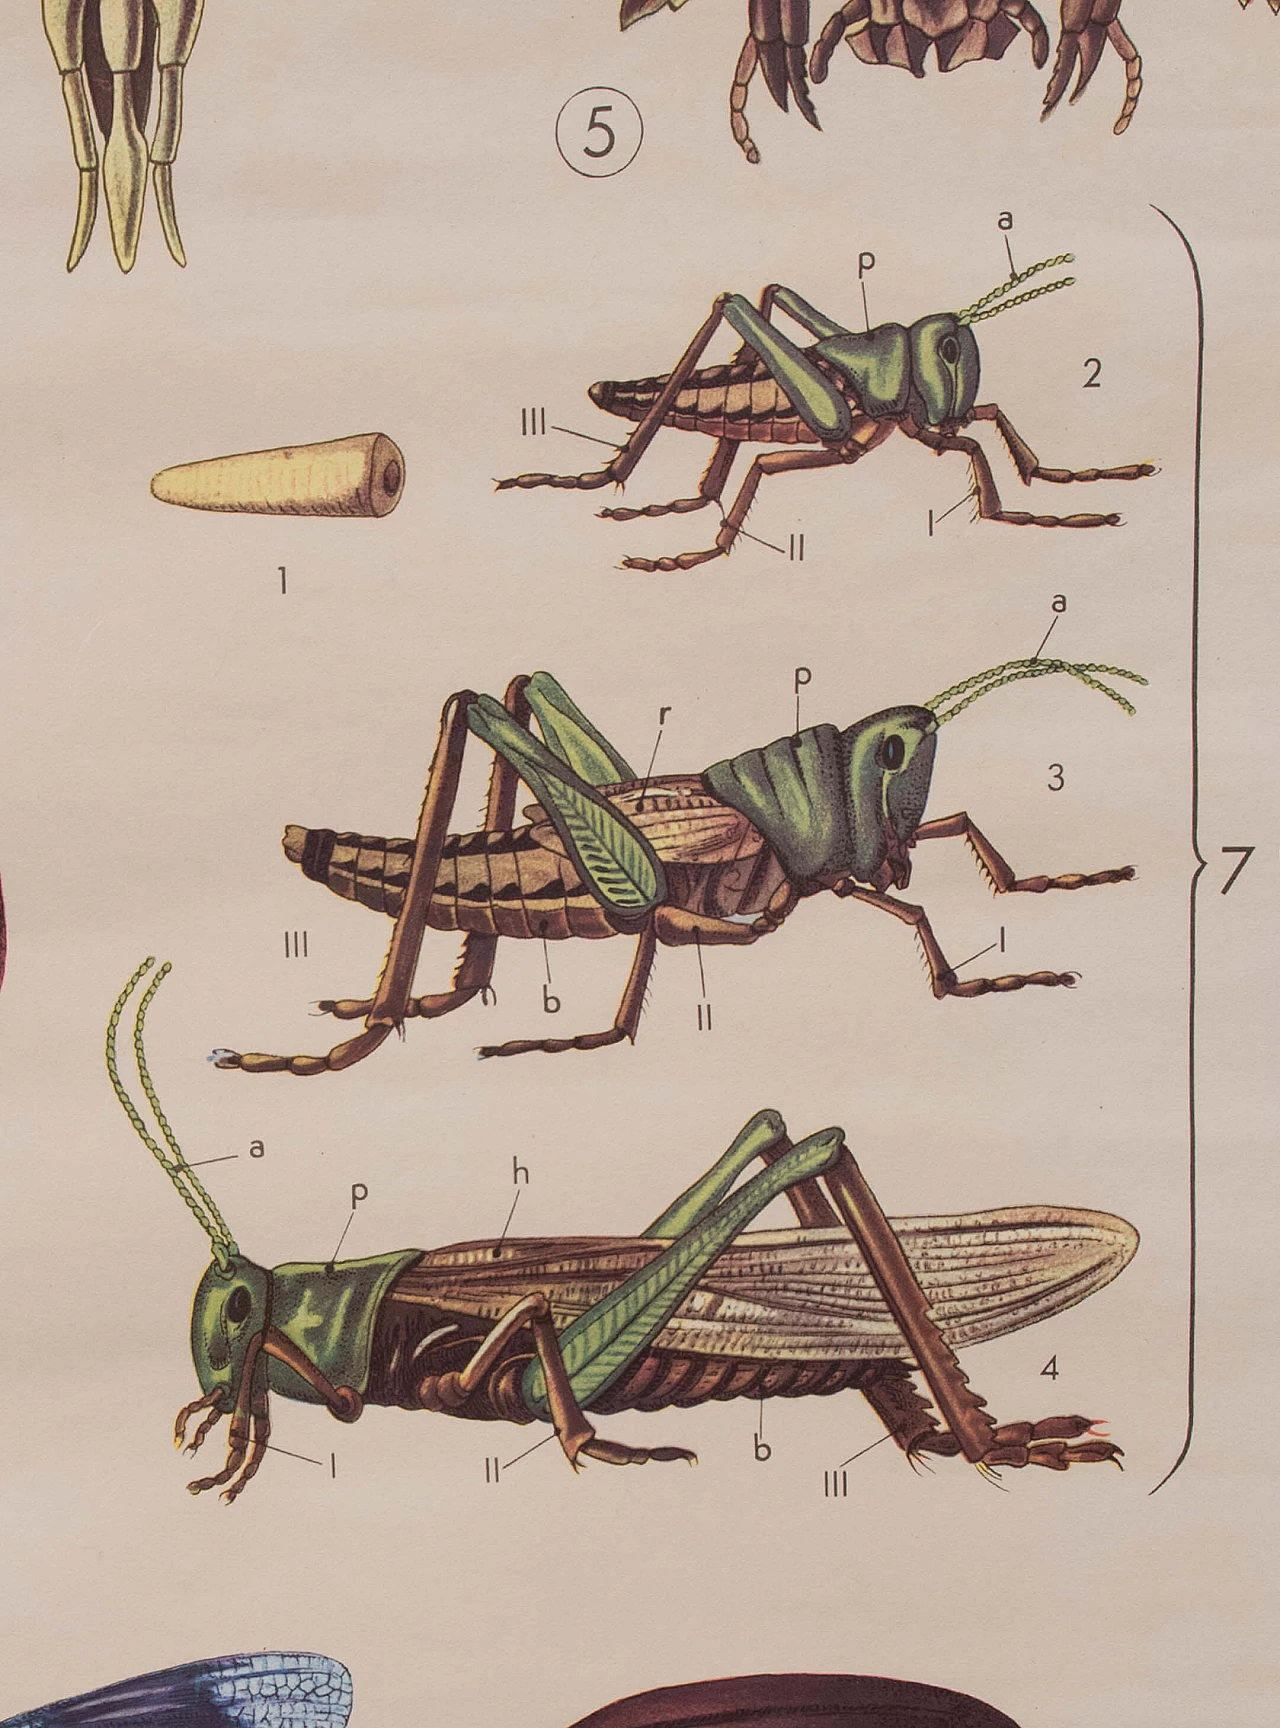 Stampa didattica a tema insetti, Paravia, 1968 1088778